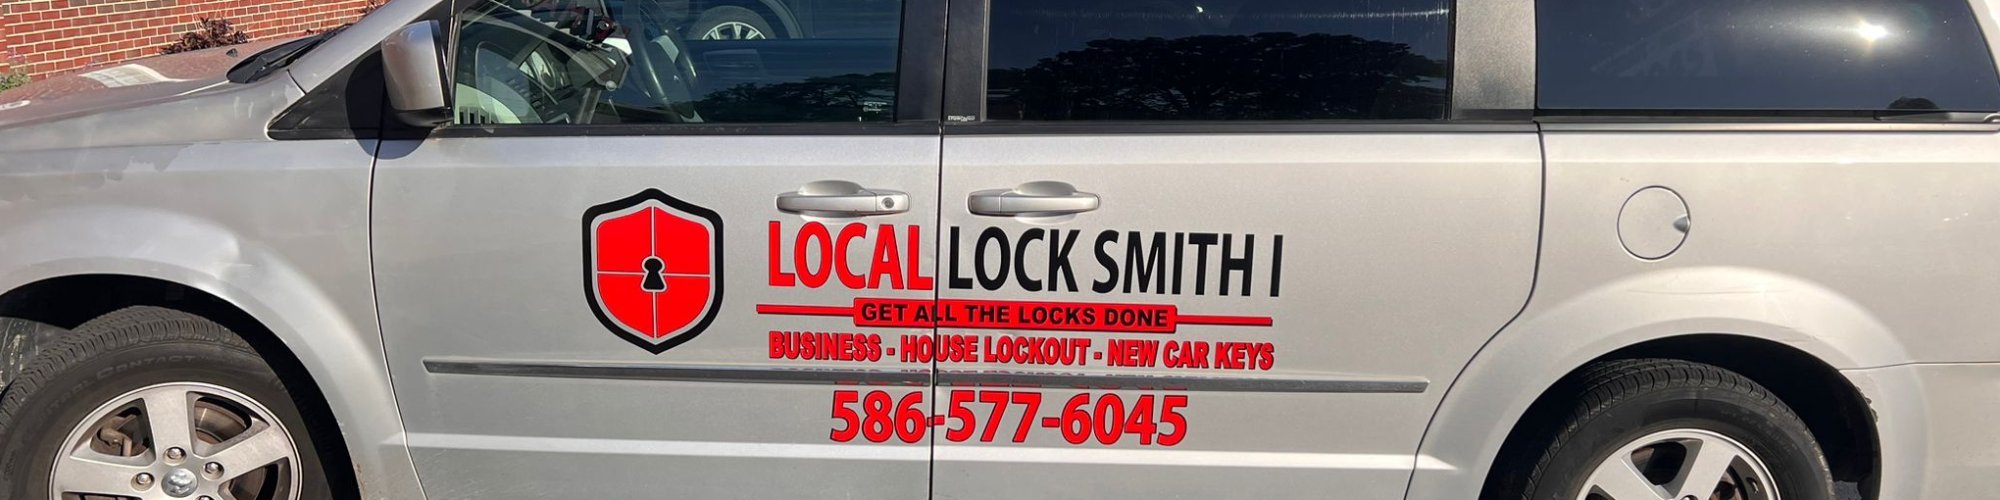 Local locksmith I LLC